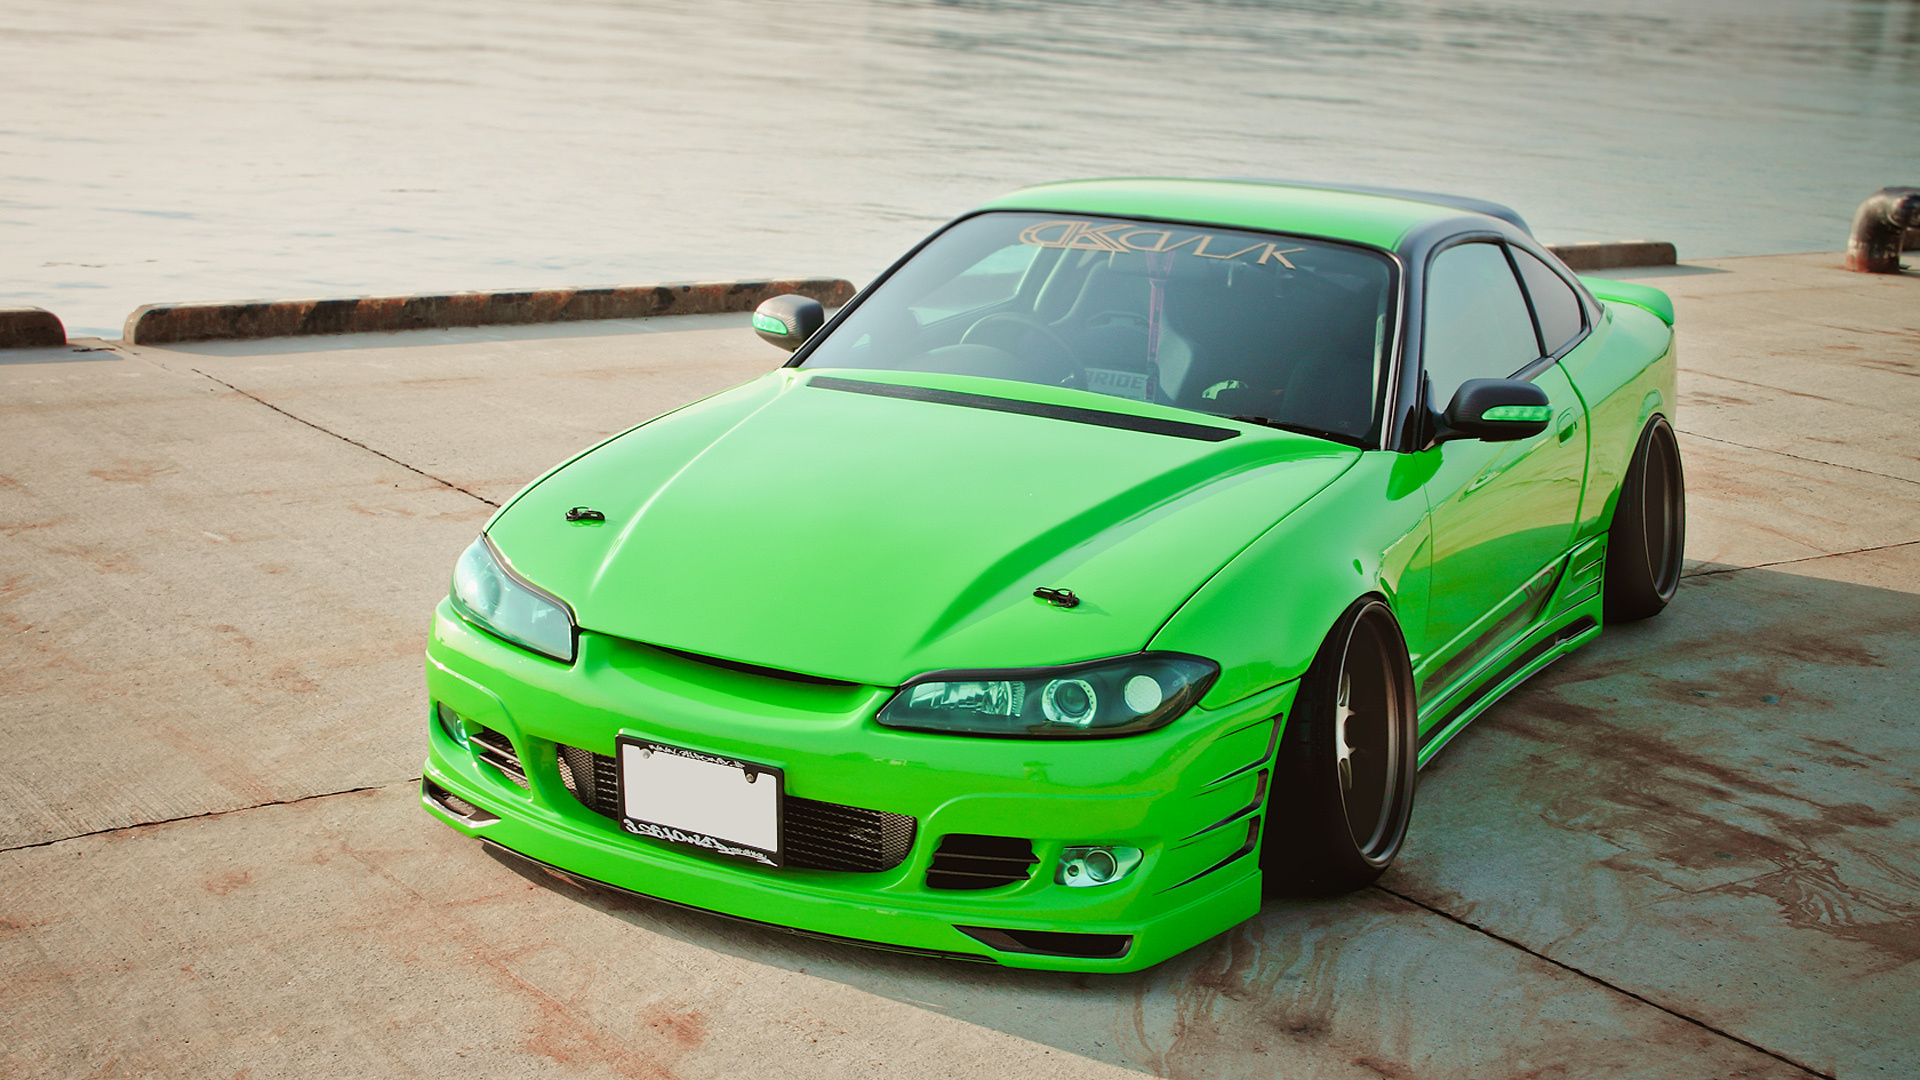 Full tunes. Nissan Silvia s15 Green. Nissan Silvia s15 зеленая. Nissan Silvia s15 Tuning.